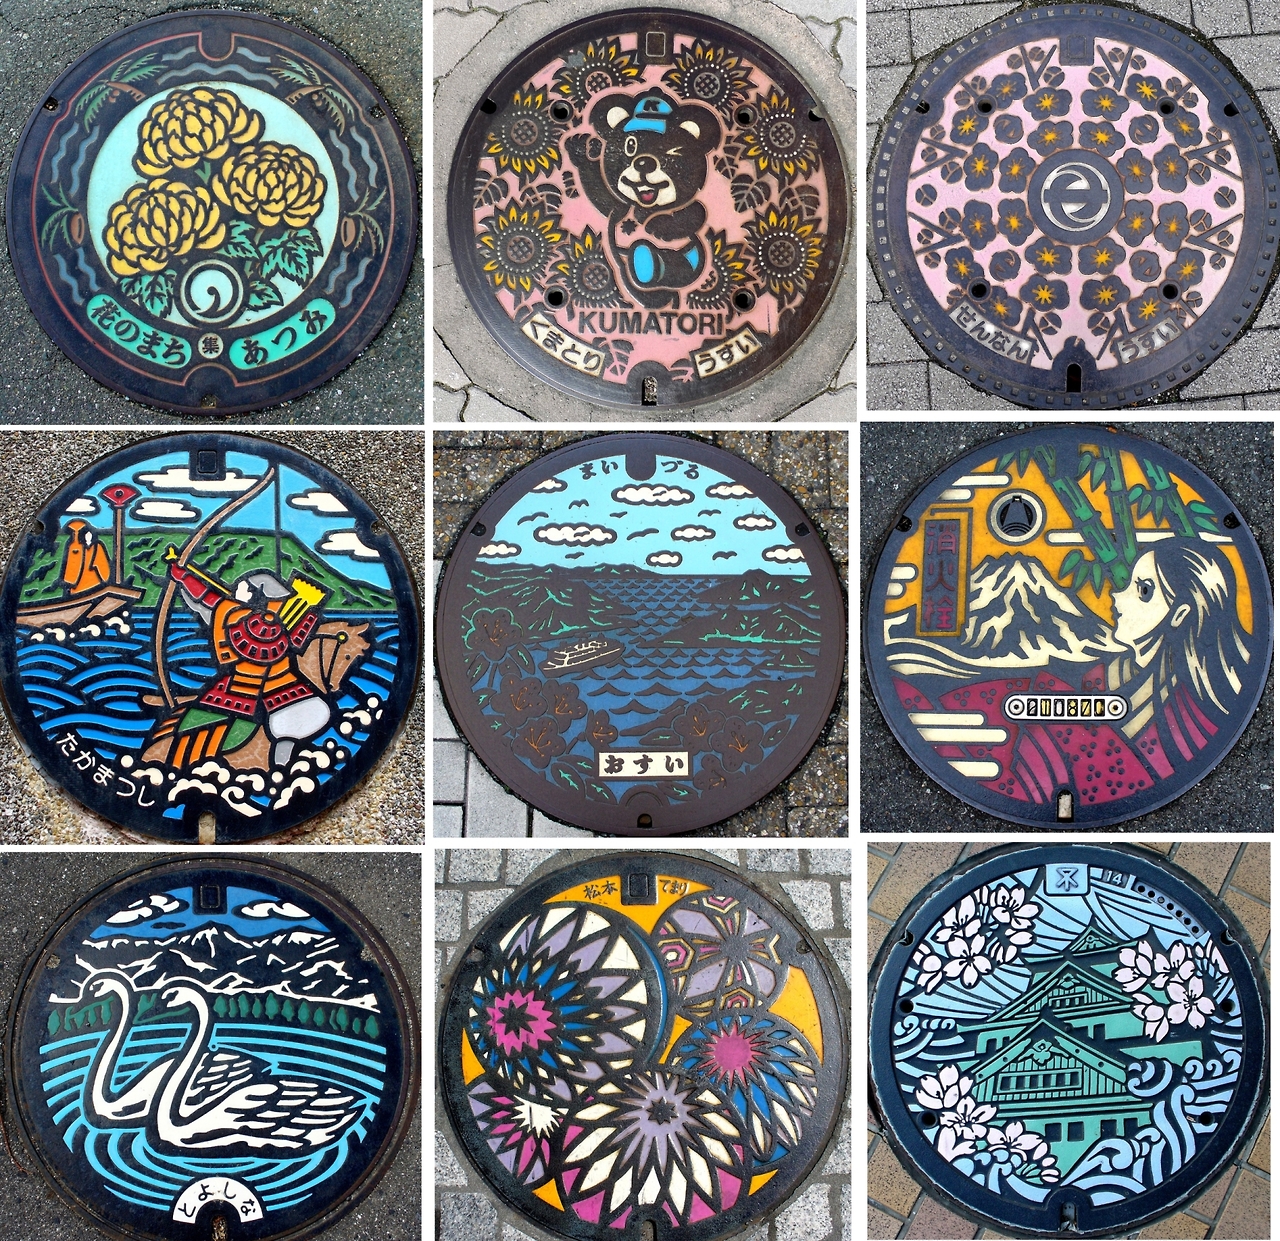 art japanese manhole covers-01